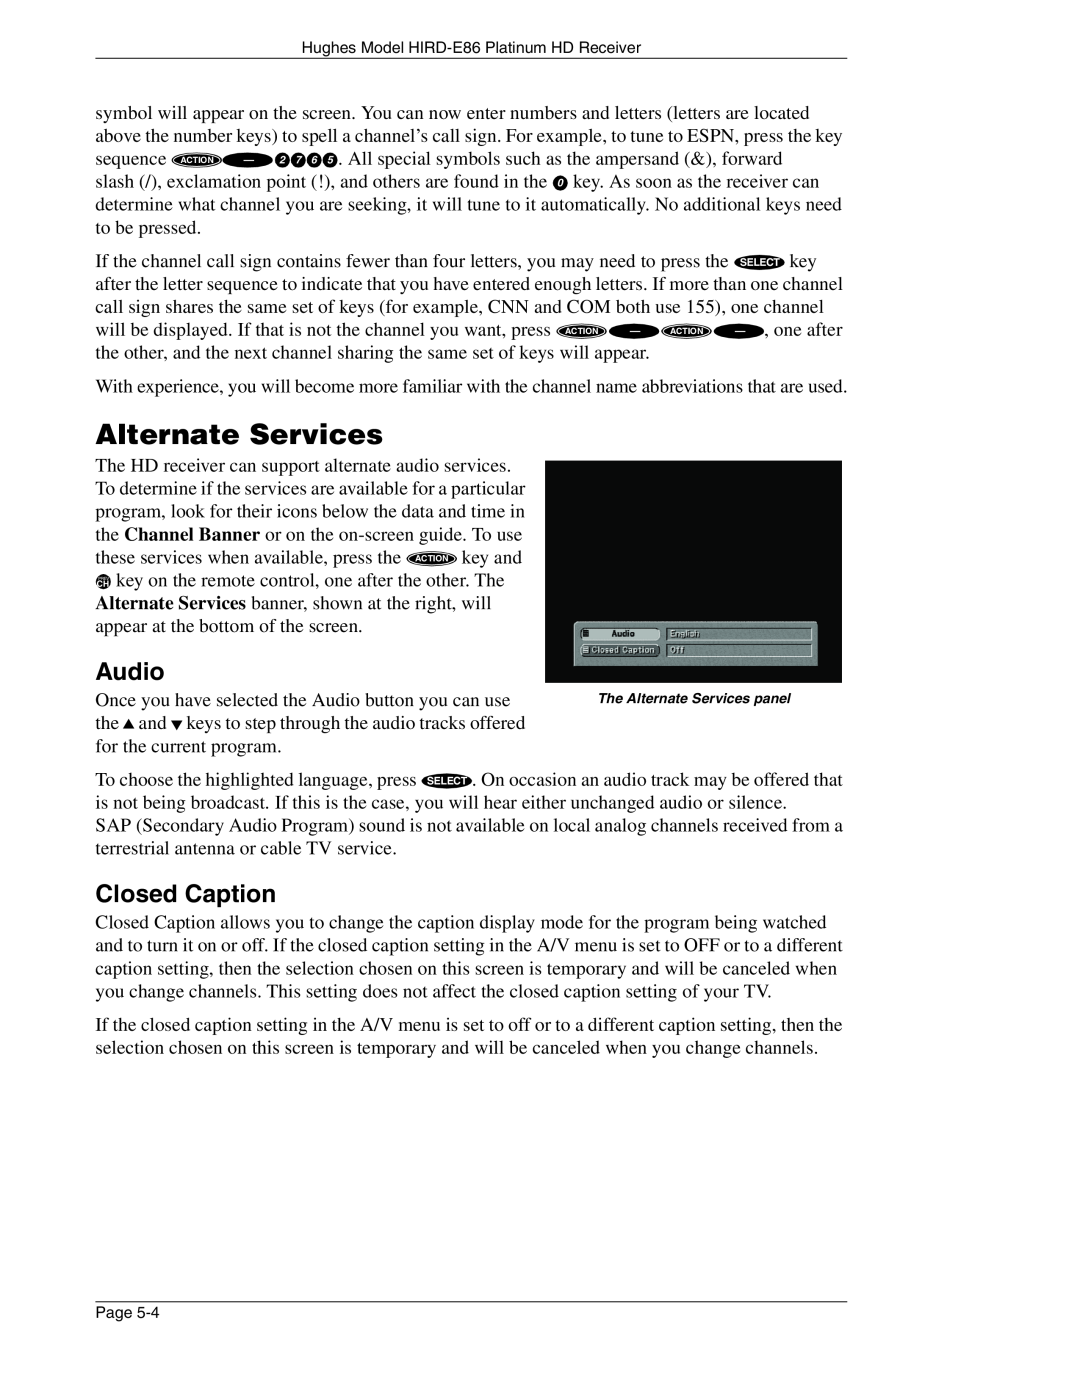 DirecTV HIRD-E86 manual Alternate Services, Audio, Closed Caption 